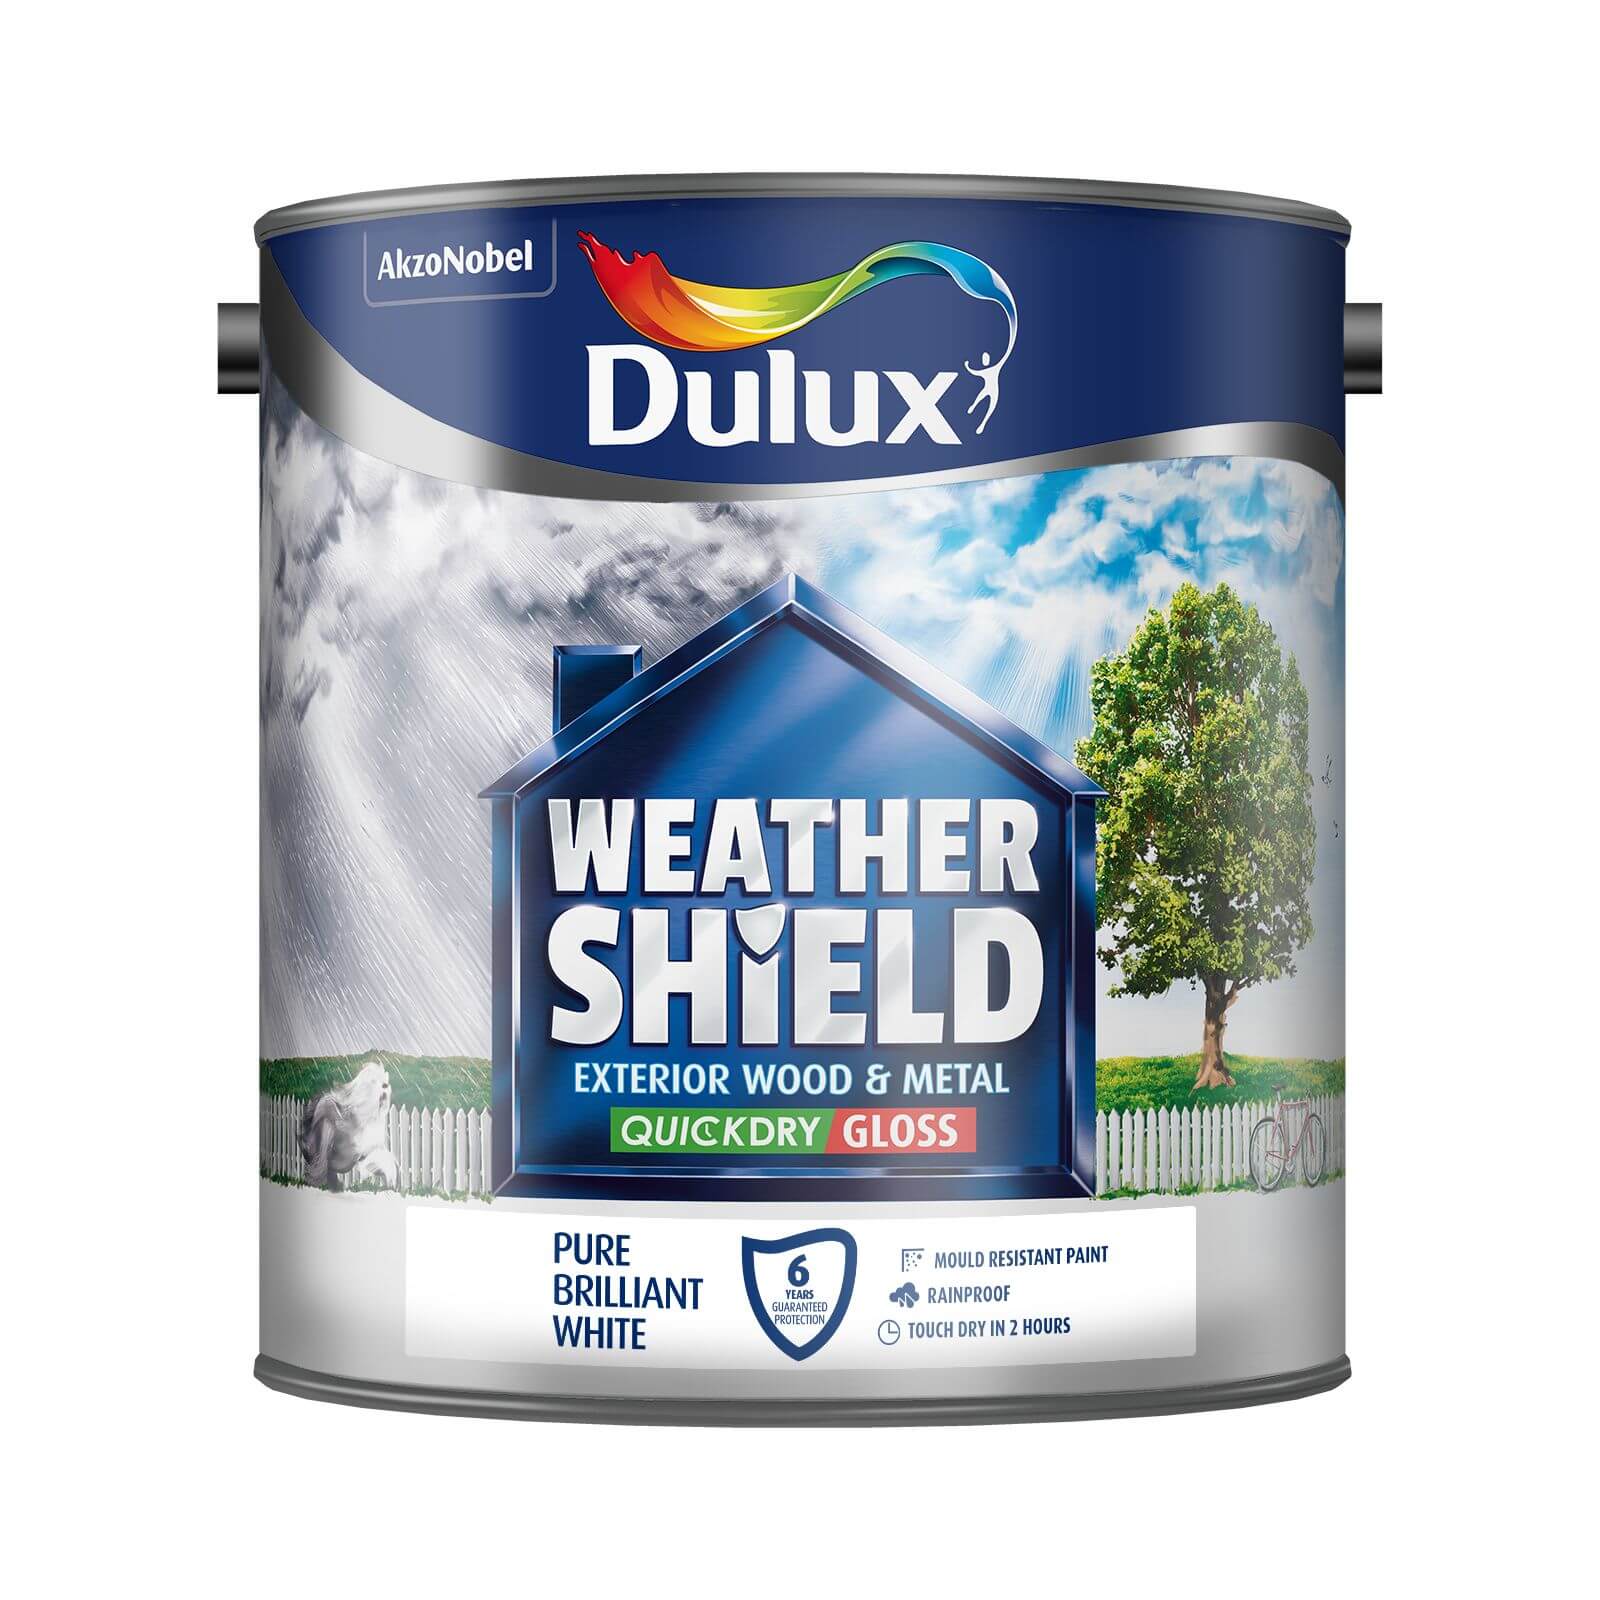 Dulux Weathershield Exterior Quick Dry Gloss Paint Pure Brilliant White - 2.5L